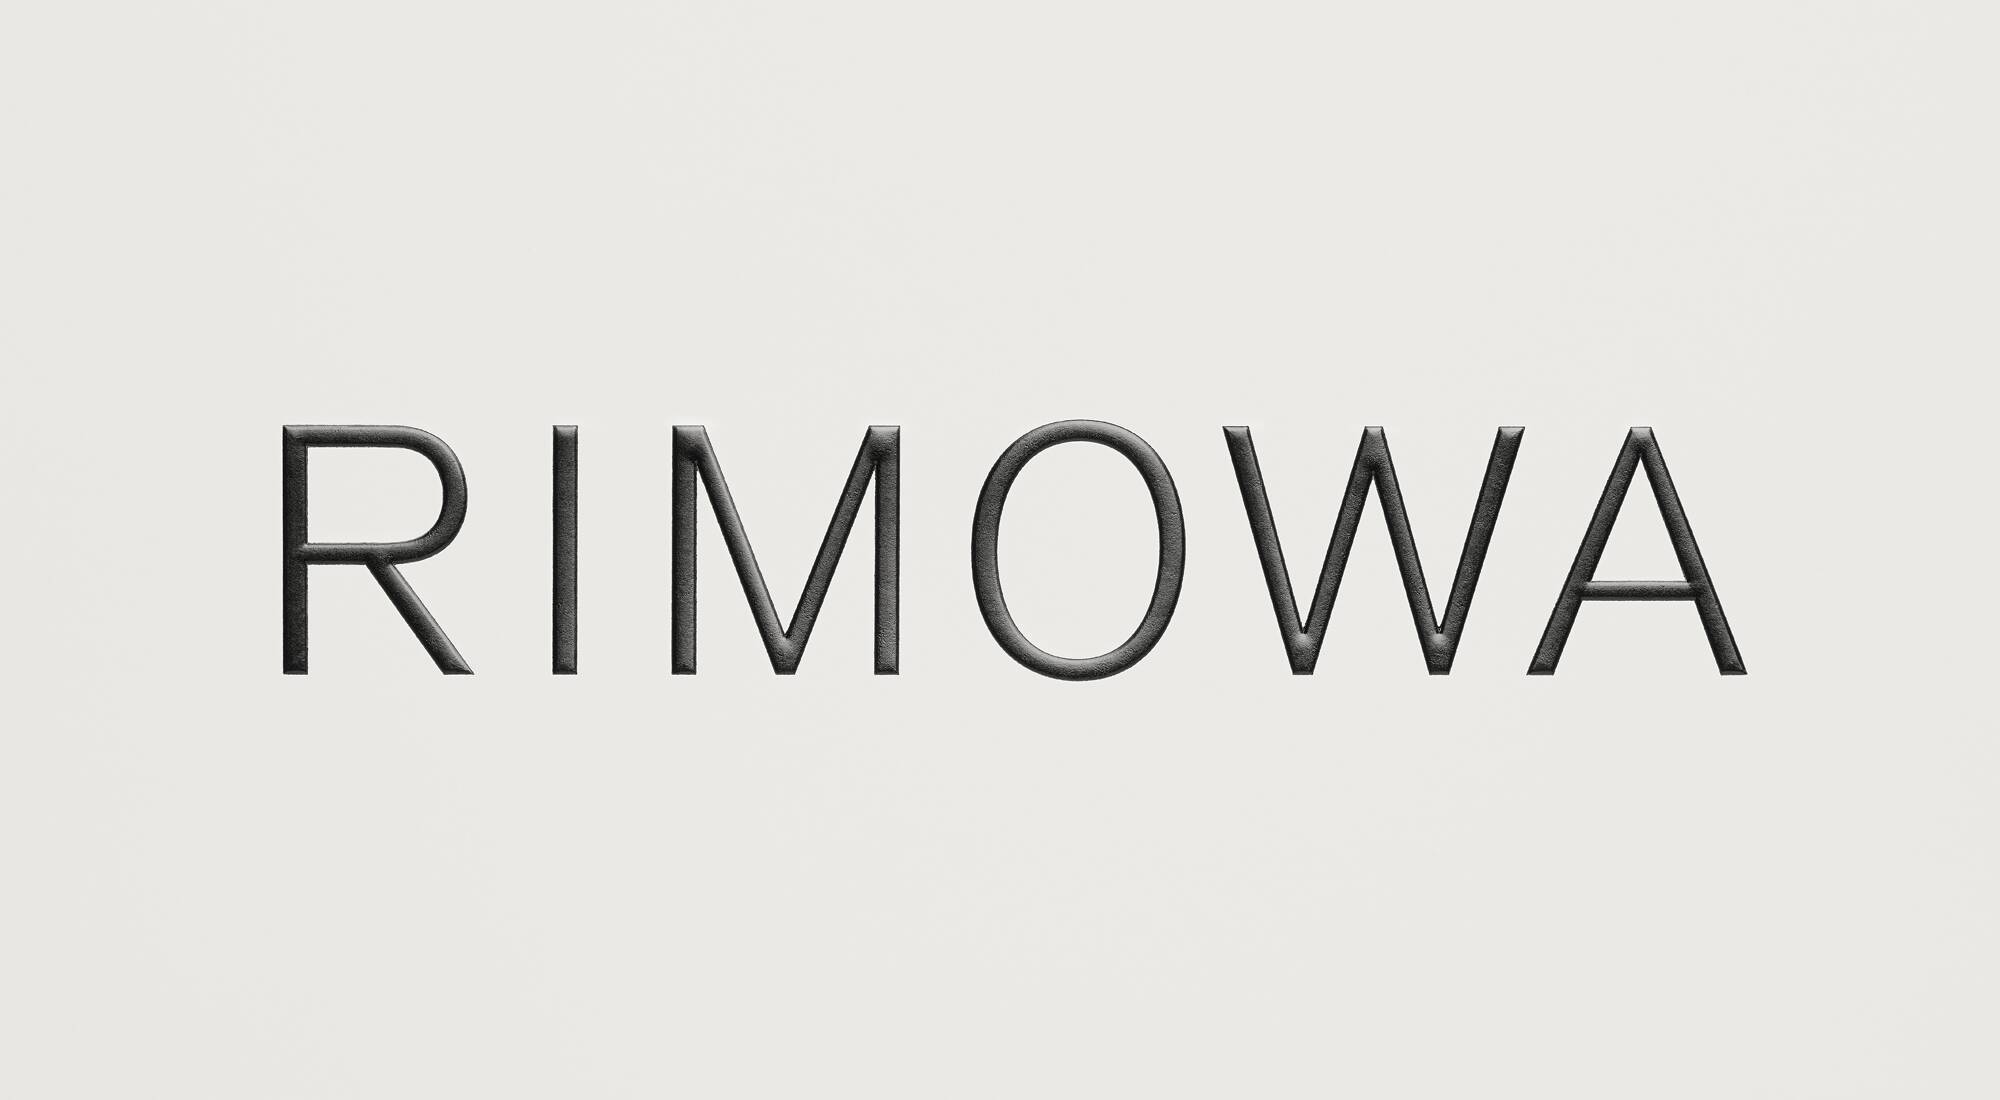 RIMOWA presents new visual identity - LVMH